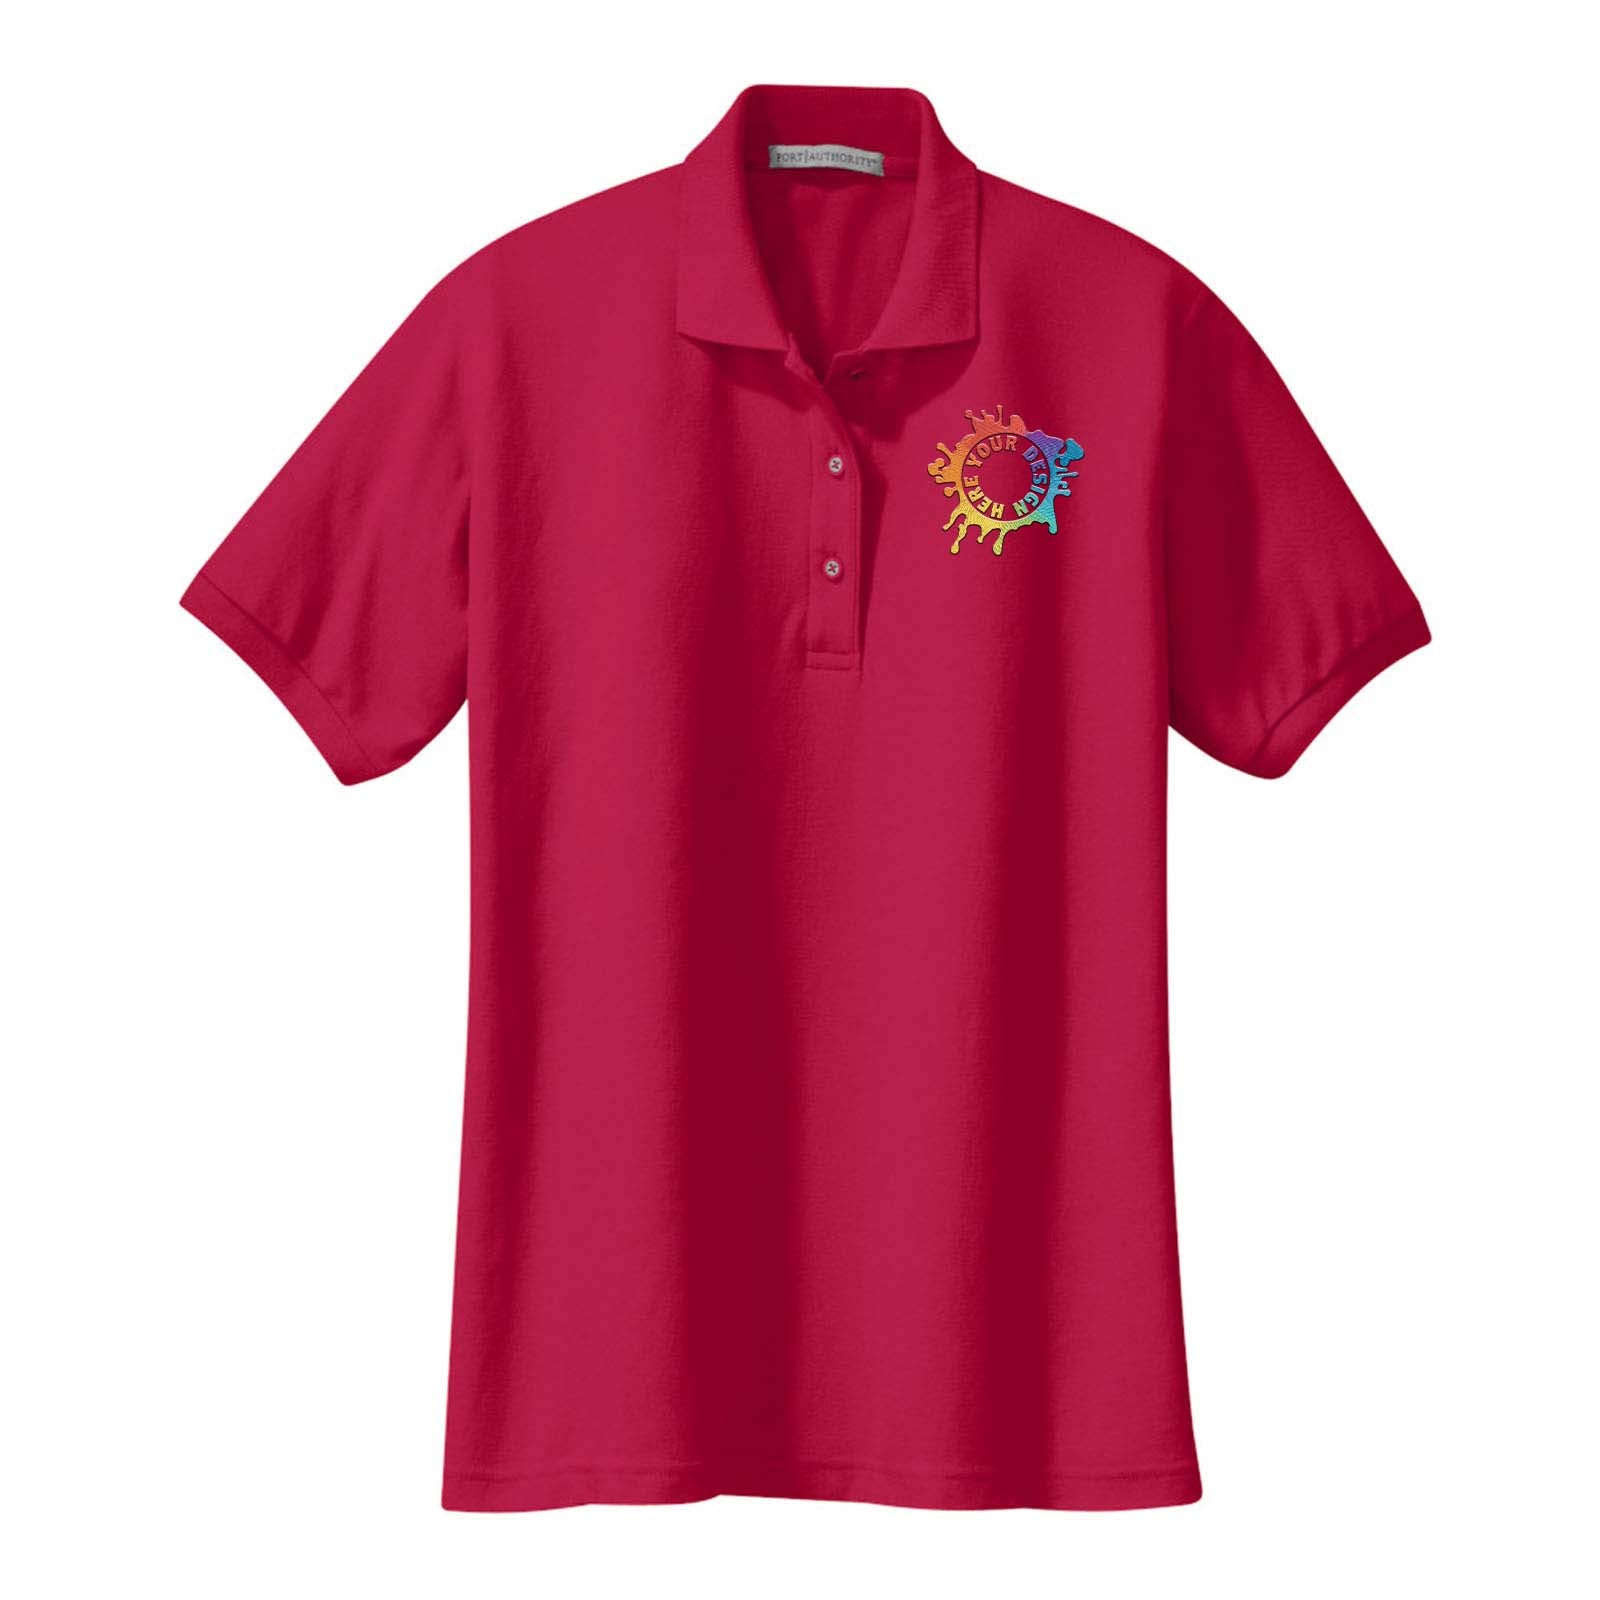 Cotton Piquet Bandana Shirt in red